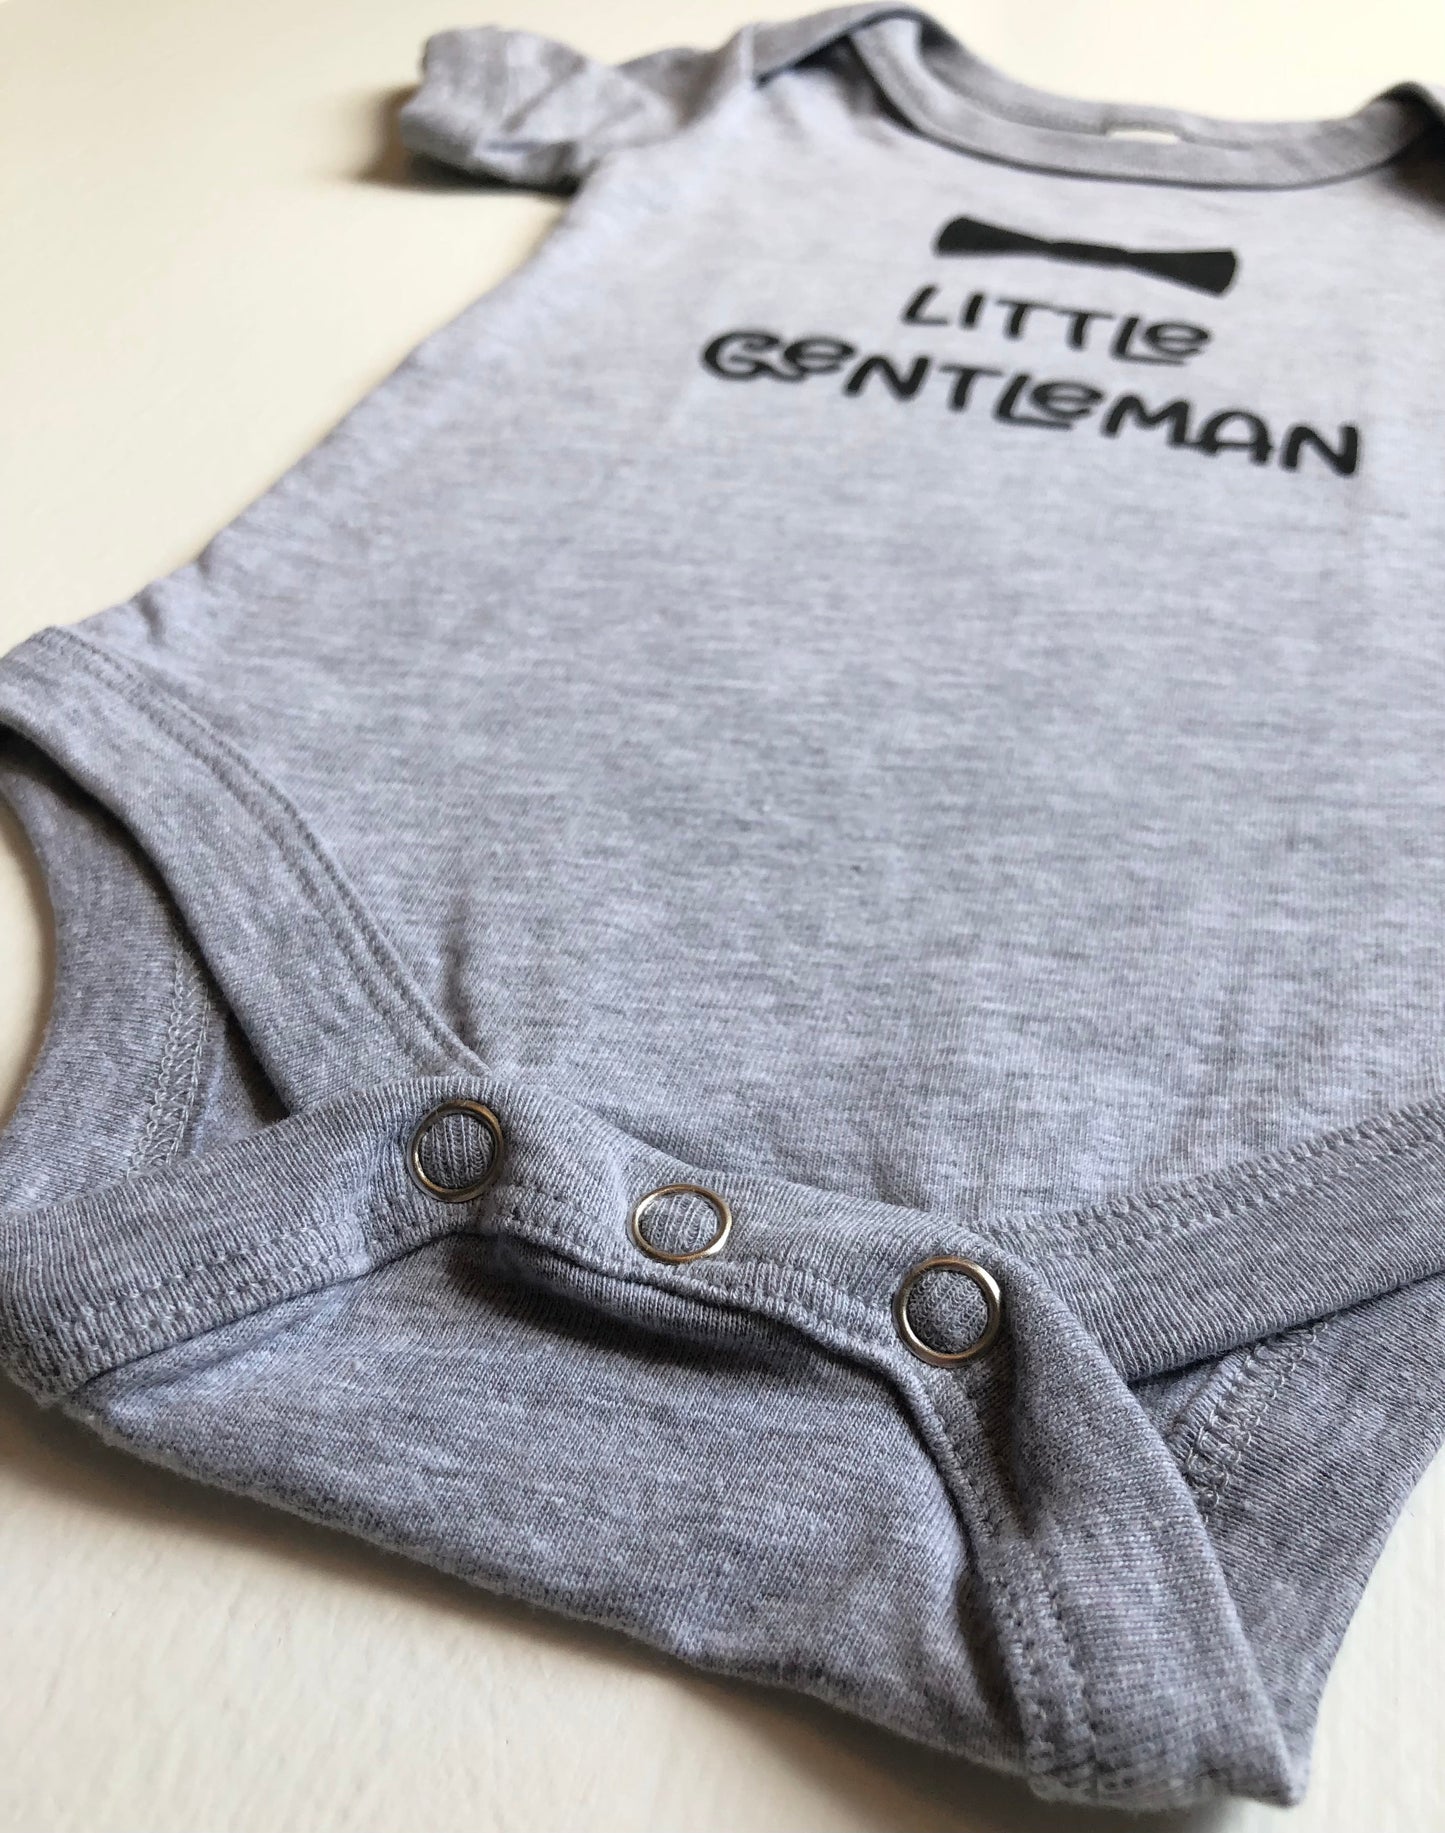 Little Gentleman Baby Bodysuit and Sock Set